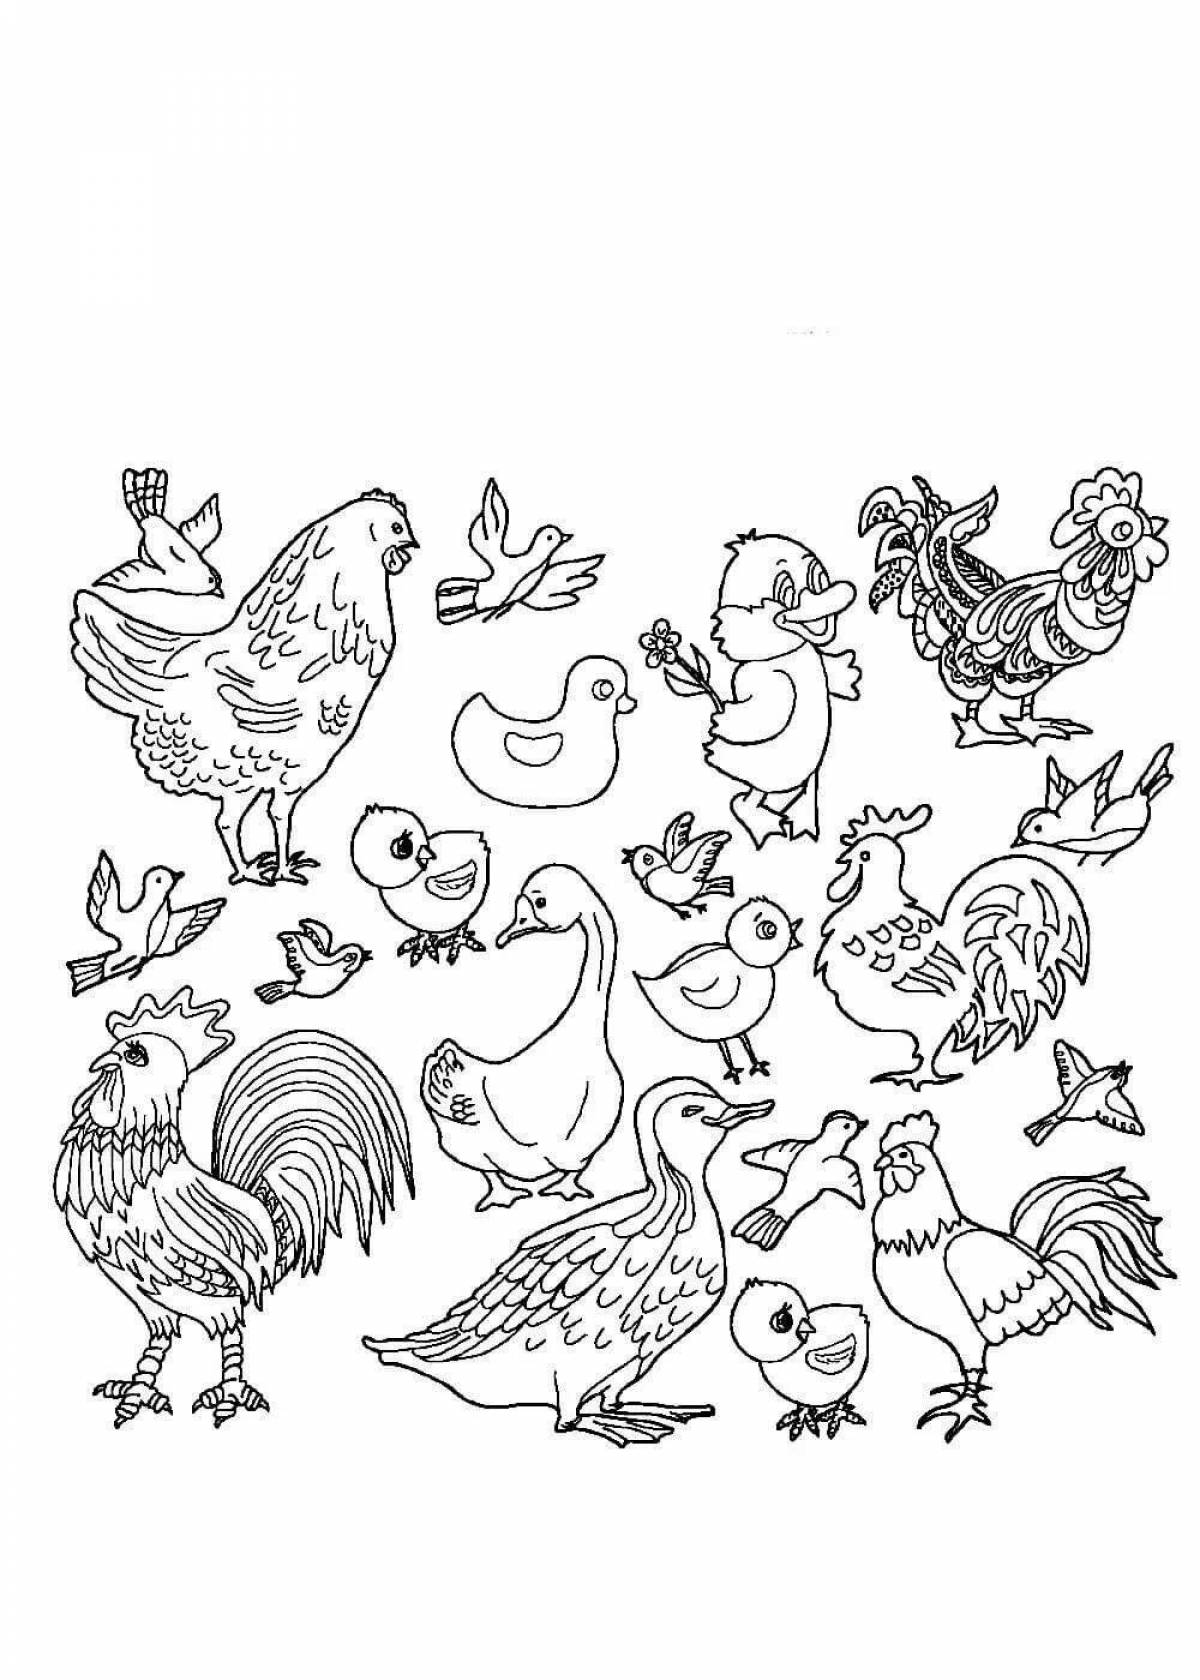 Exquisite bird yard coloring book for teens